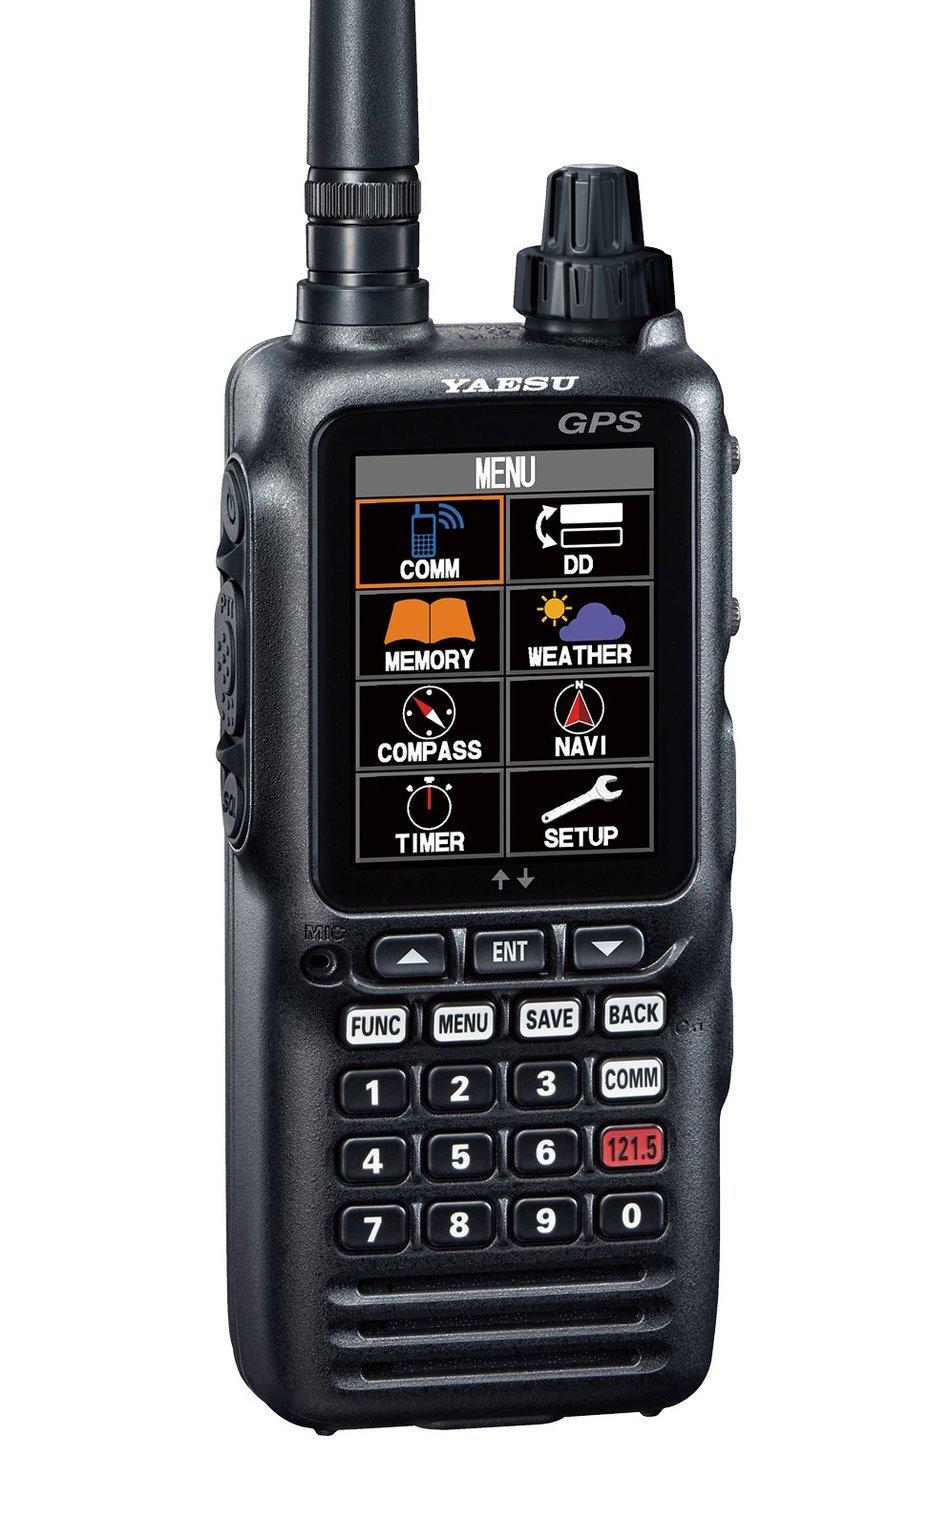 FTA-850L Air-band Handheld VHF Transceiver